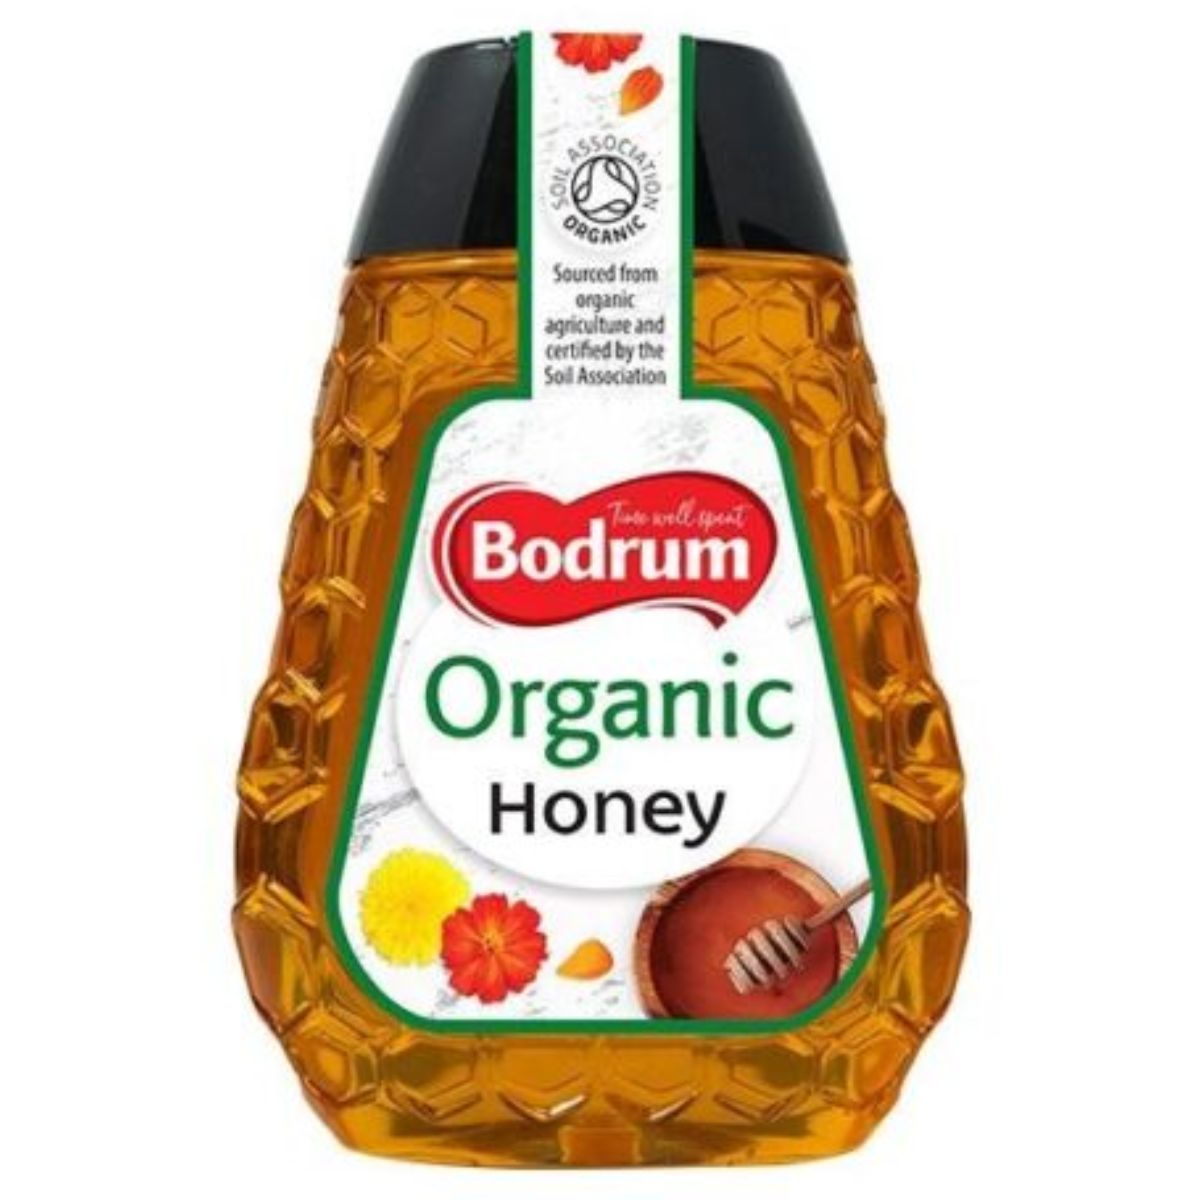 A bottle of Bodrum - Organic Honey - 250g.